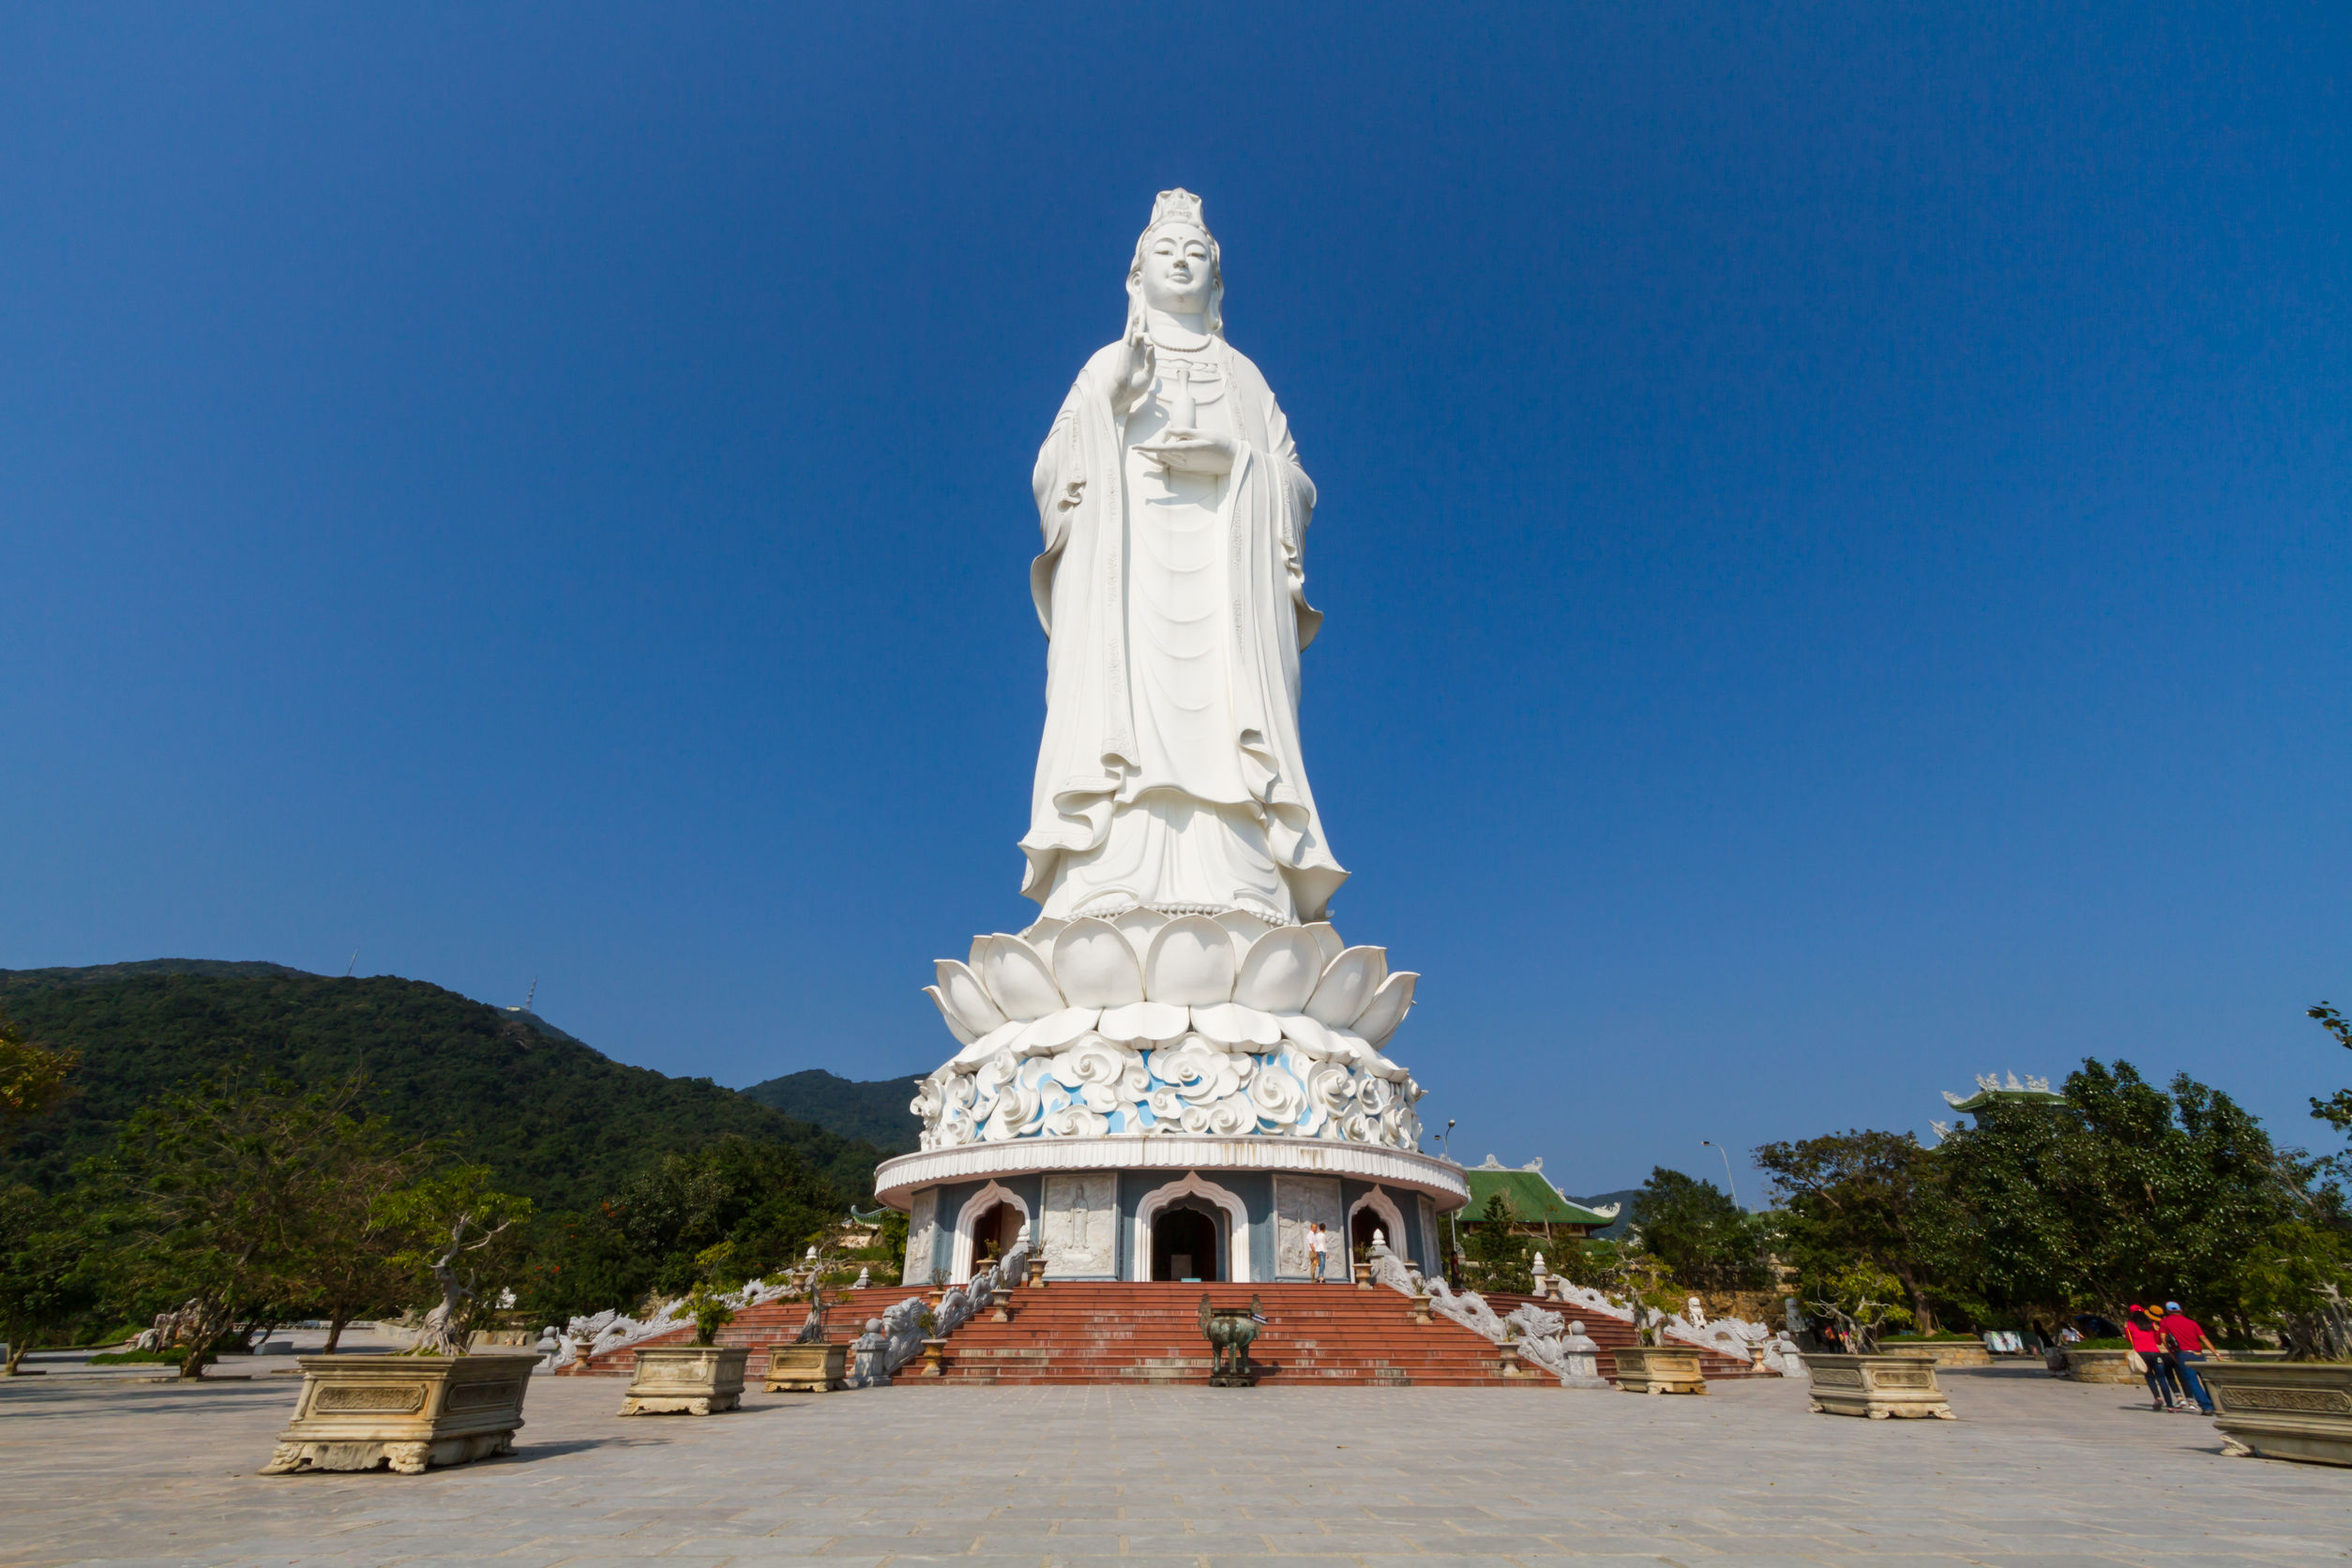 Linh Ung Pagoda - spiritual tourist attraction on Son Tra Peninsula